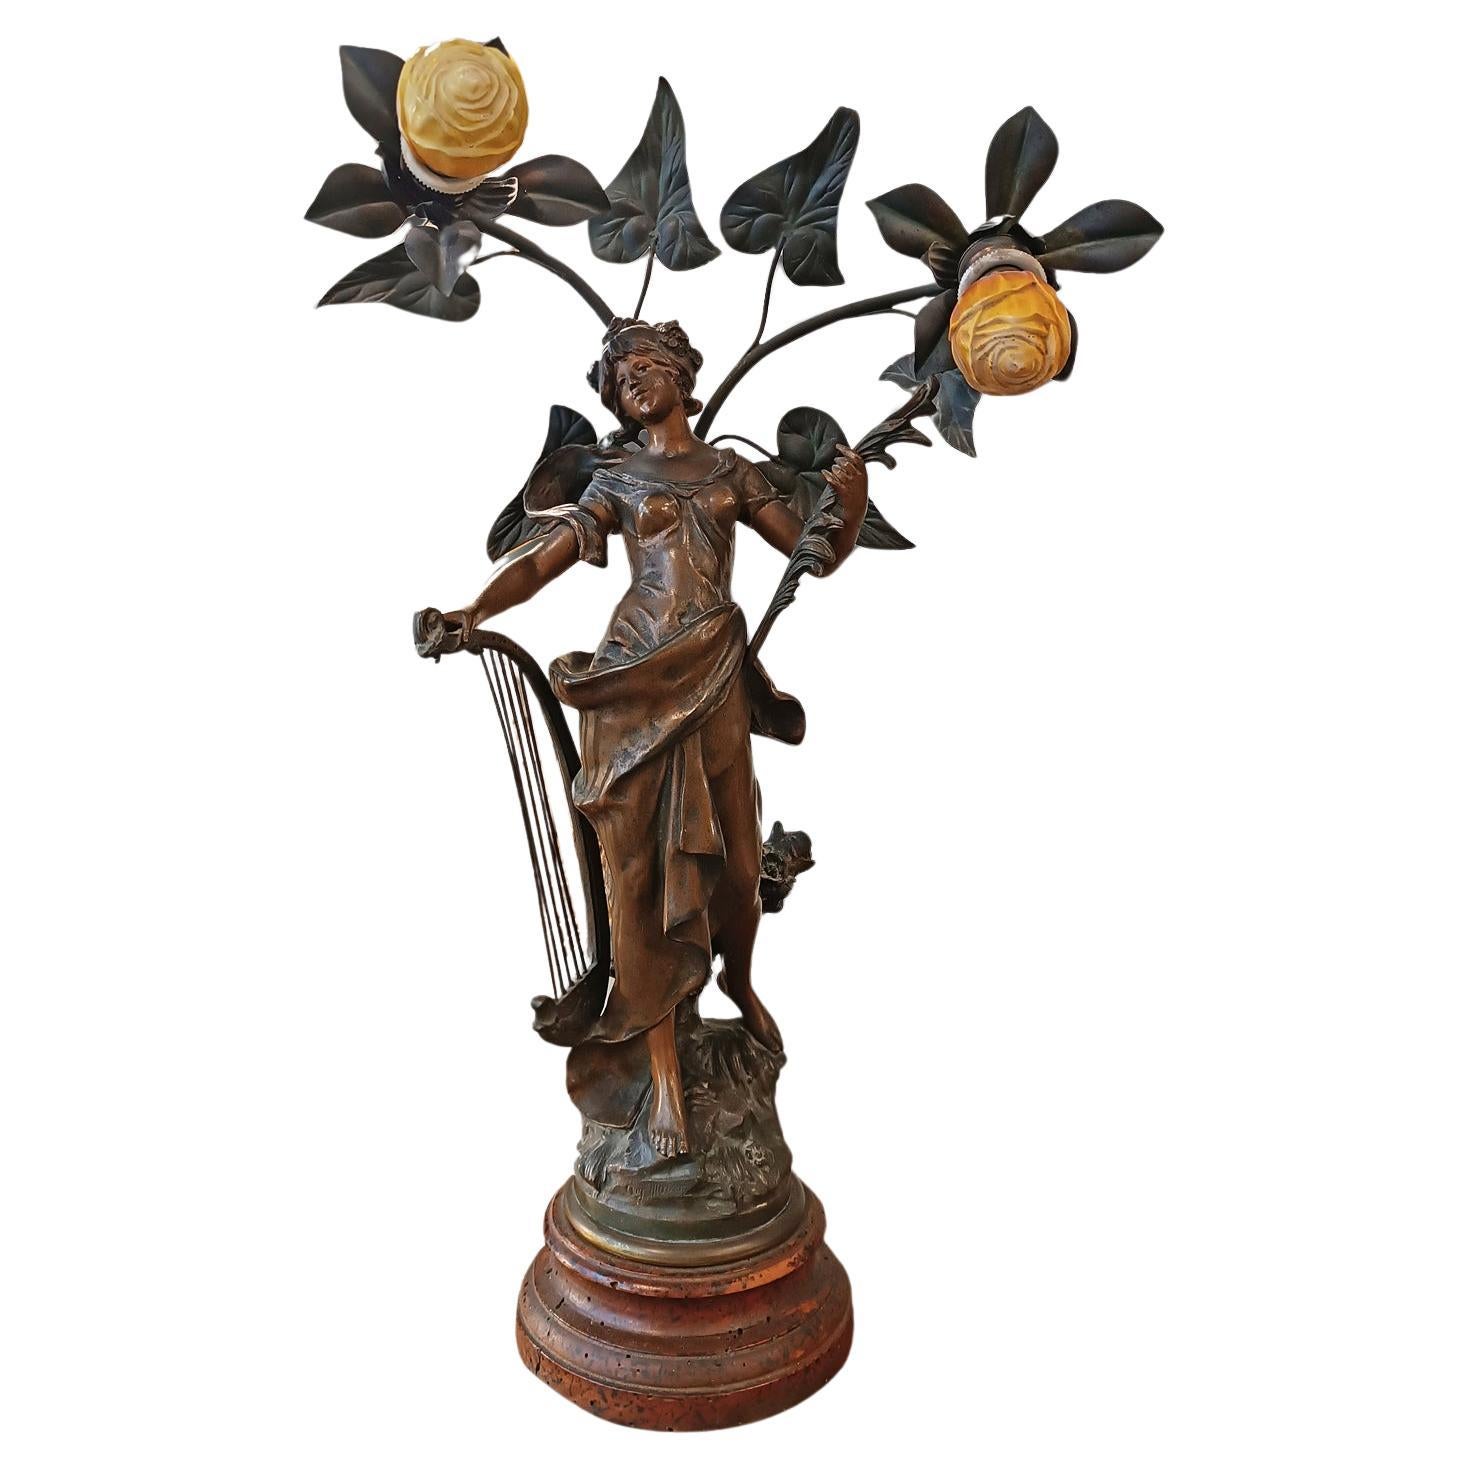 20th CENTURY LIBERTY LAMP AUGUSTE MOREAU "LA MELODIE" For Sale